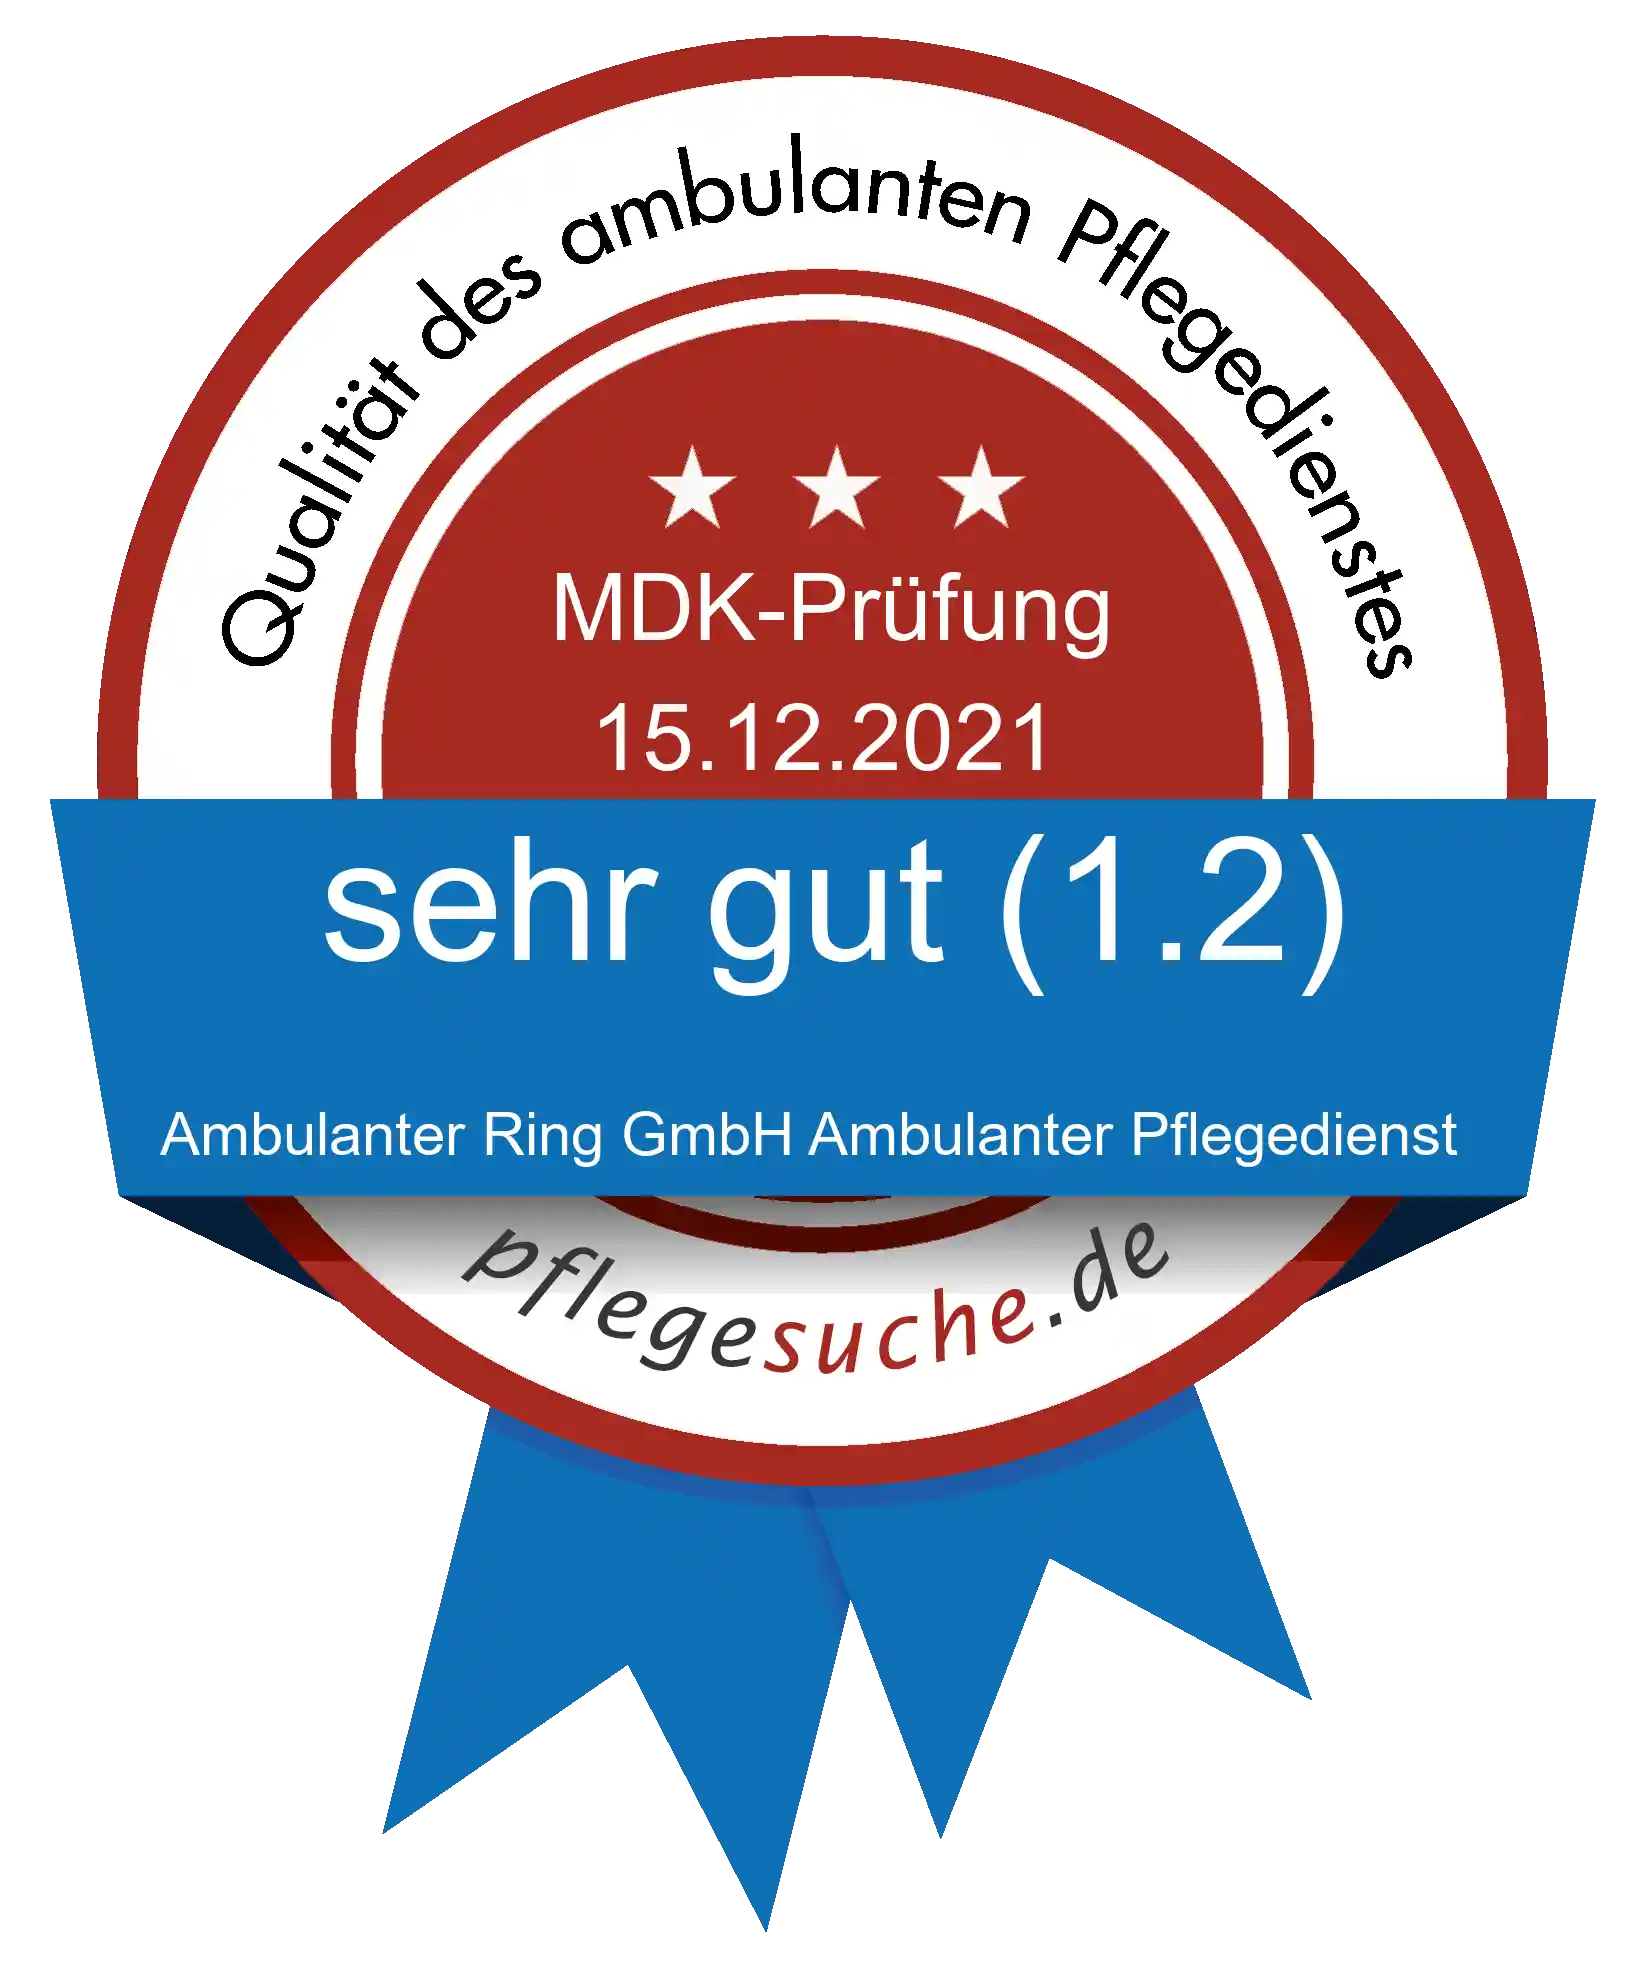 Siegel Benotung: Ambulanter Ring GmbH Ambulanter Pflegedienst